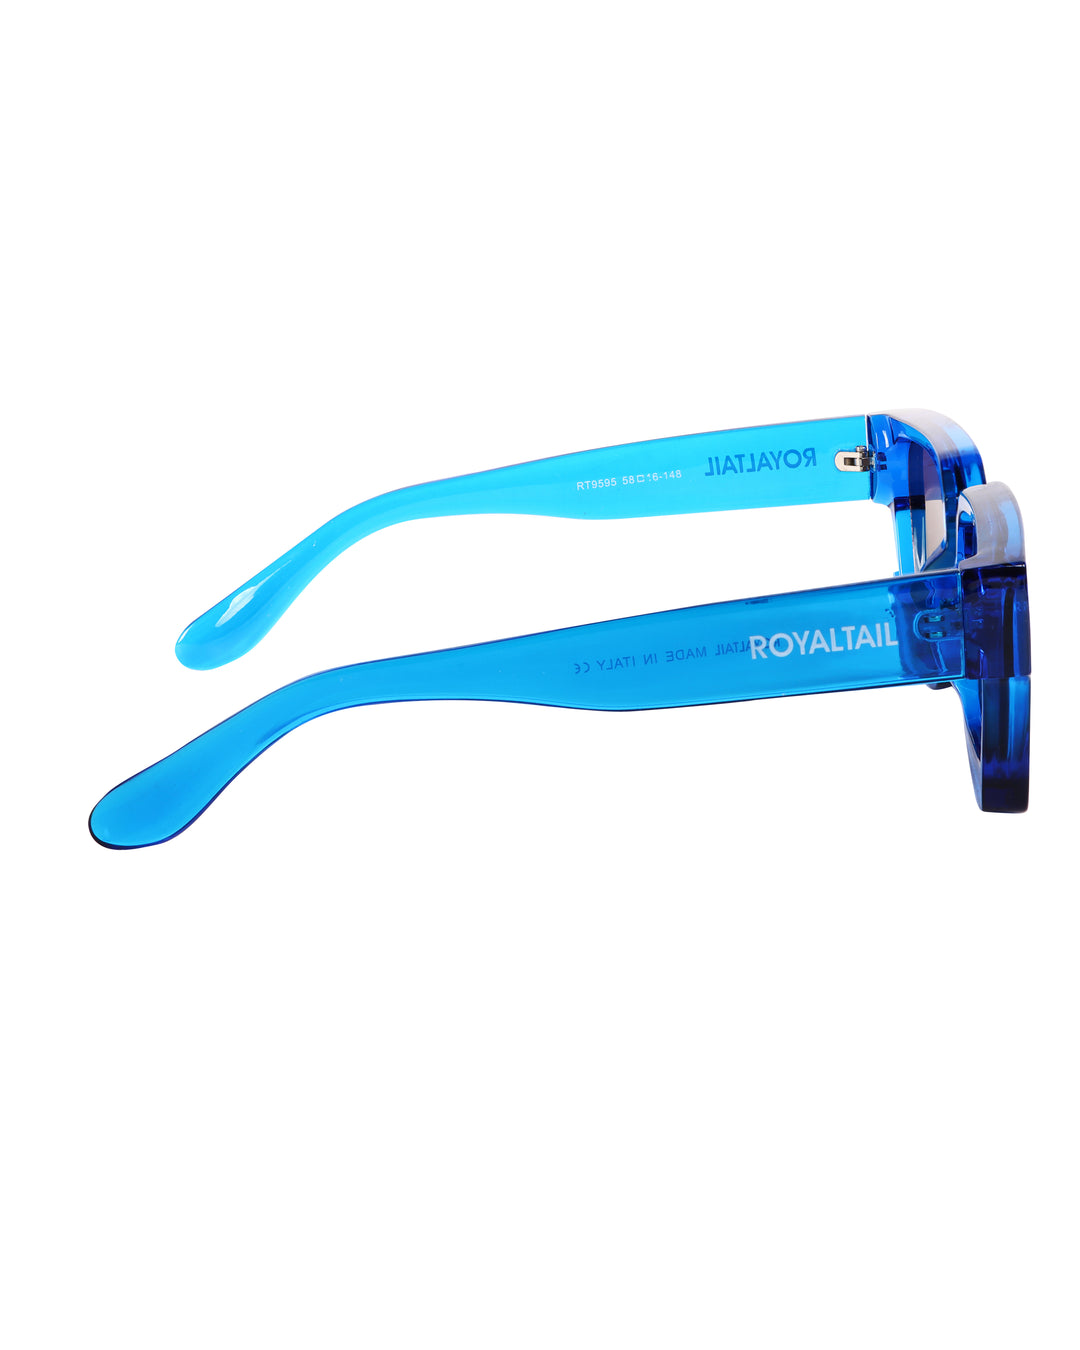 Tartaruga Unisex Classic Thick Square Aqua Blue UV Protected Sunglasses RT068